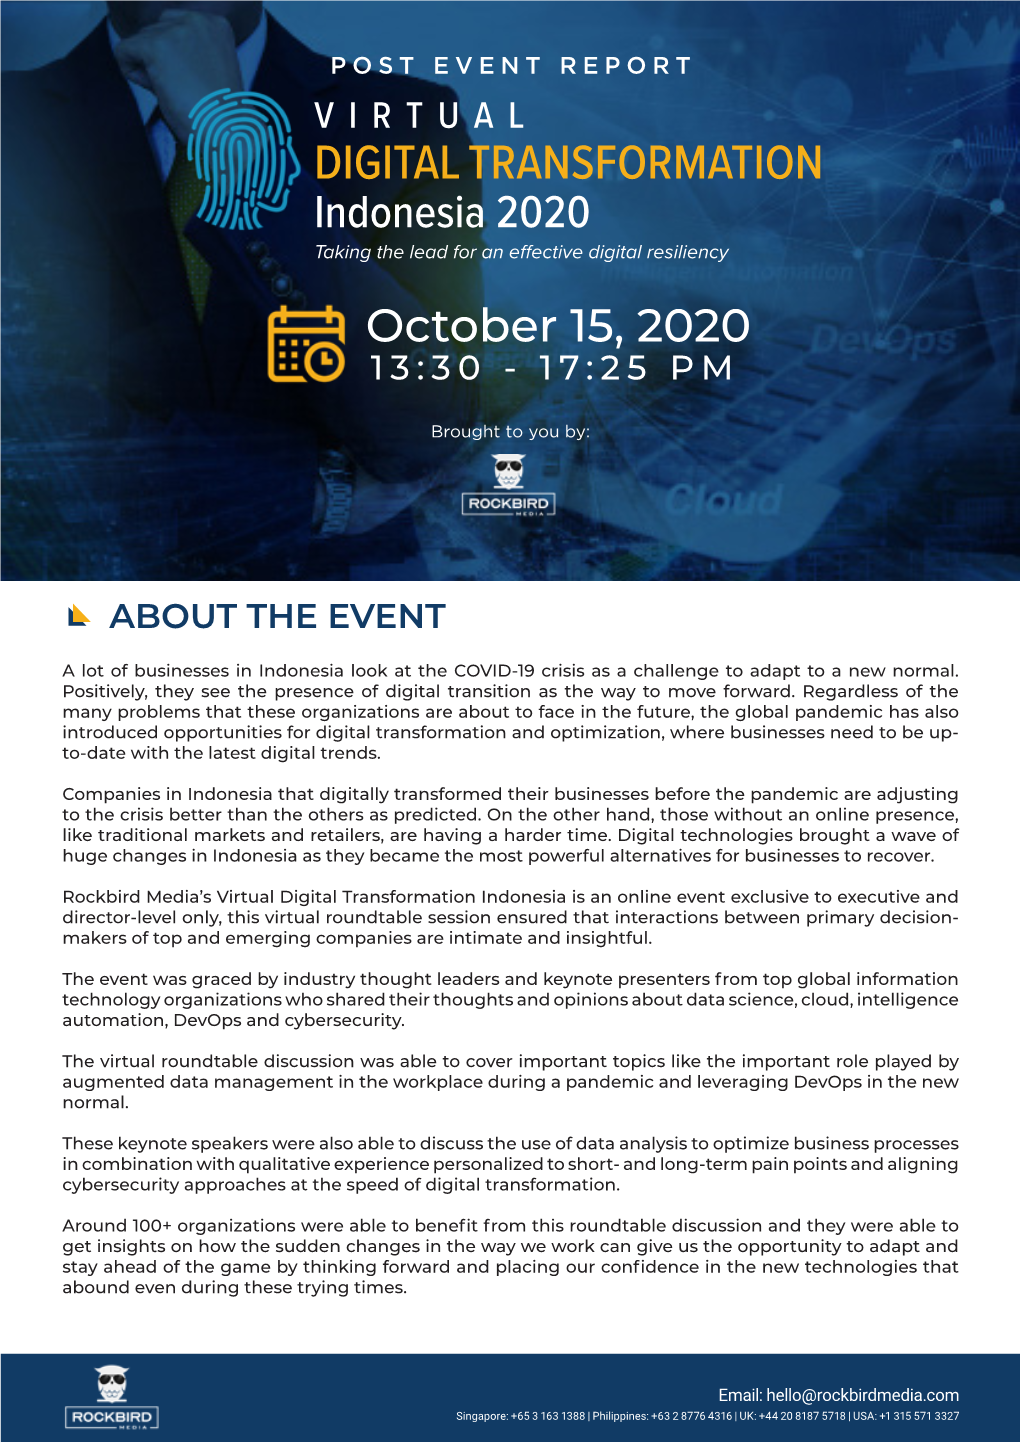 Virtual Indonesia 2020 Digital Transformation Post Event